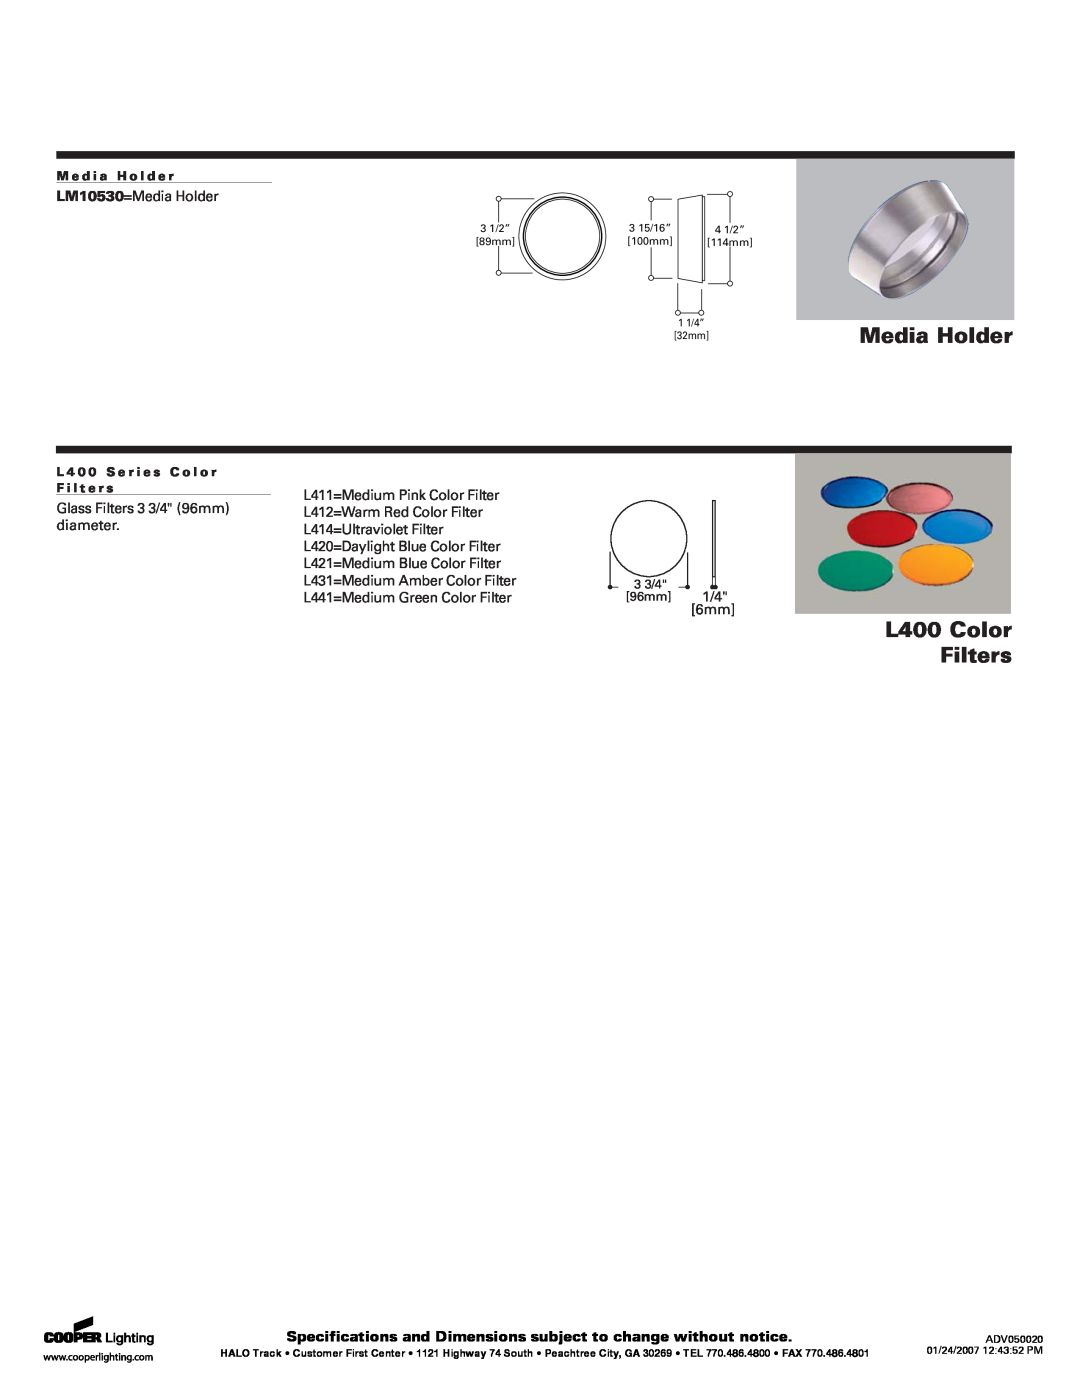 Halo Lighting System LA10530, L10530, LF10530 Media Holder, L400 Color Filters, Cube Louver Cube Louver, M m Pink 